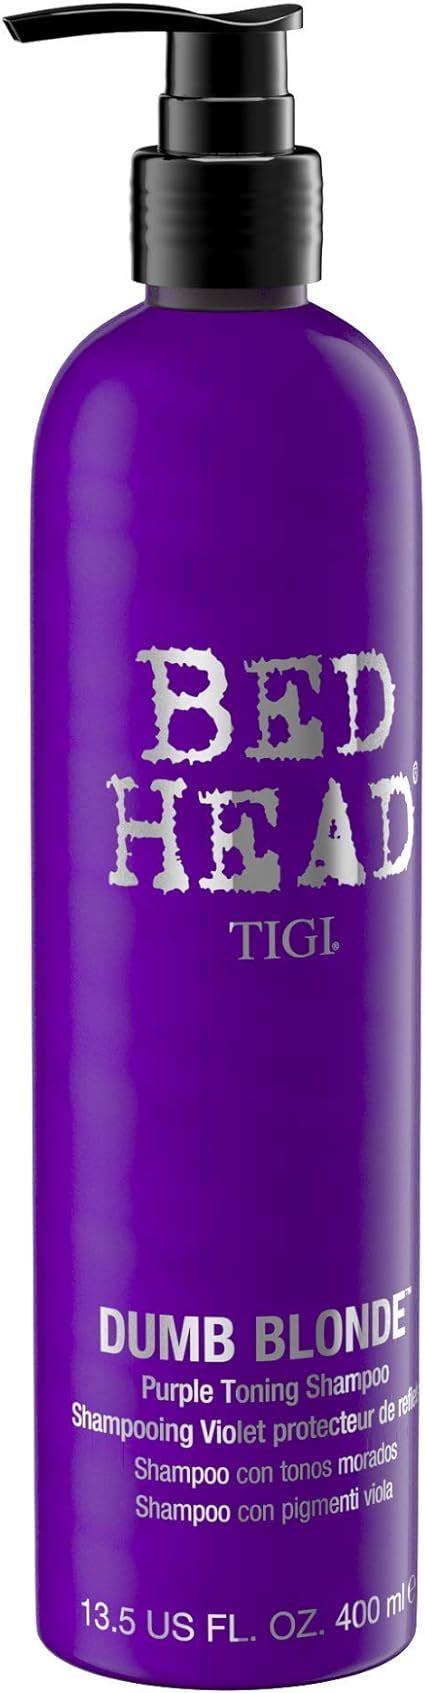 Tigi Bed Head By Tigi Dumb Blonde Purple Toning Shampoo For Blonde Hair